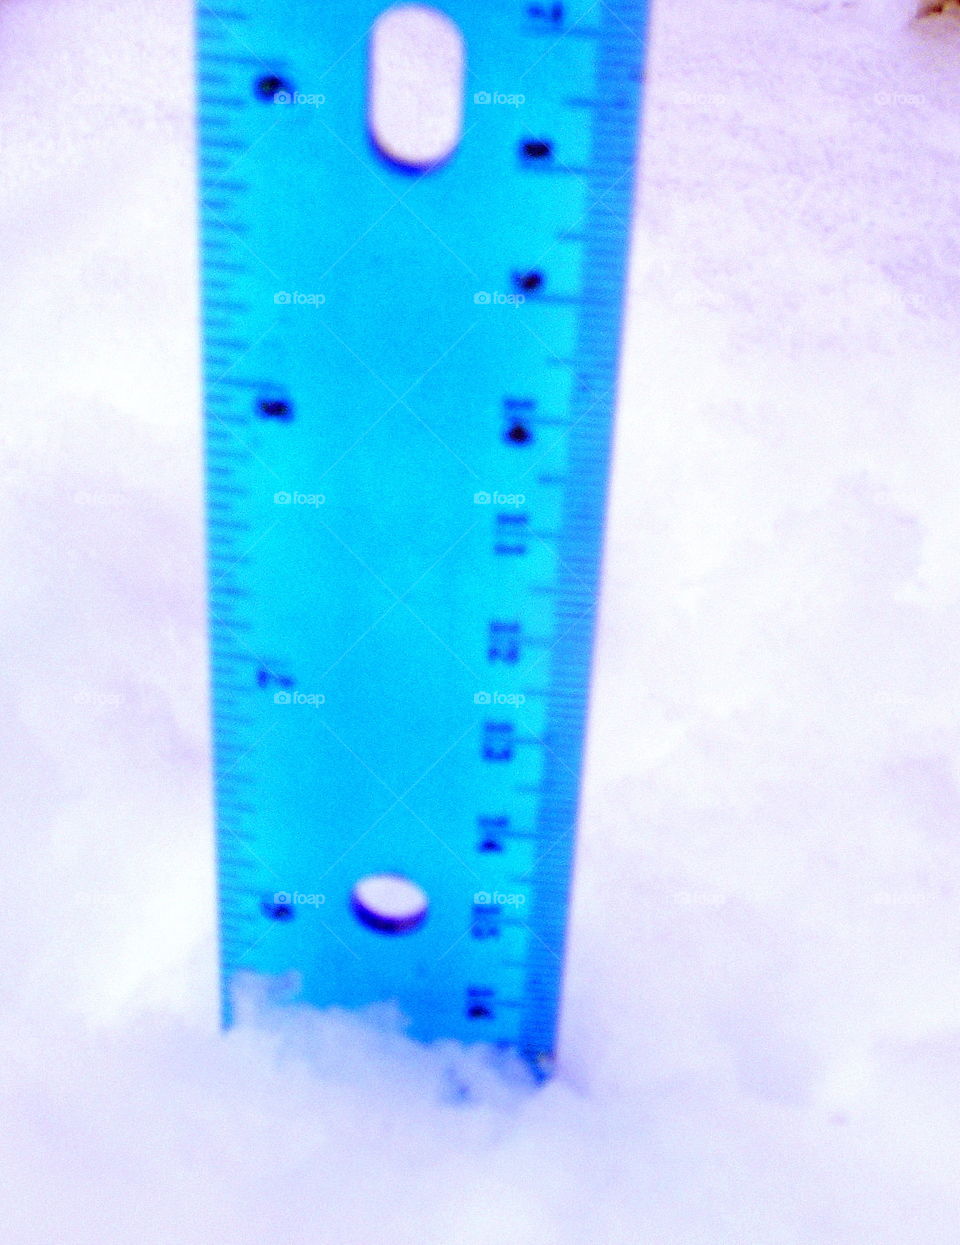 measuring the snow